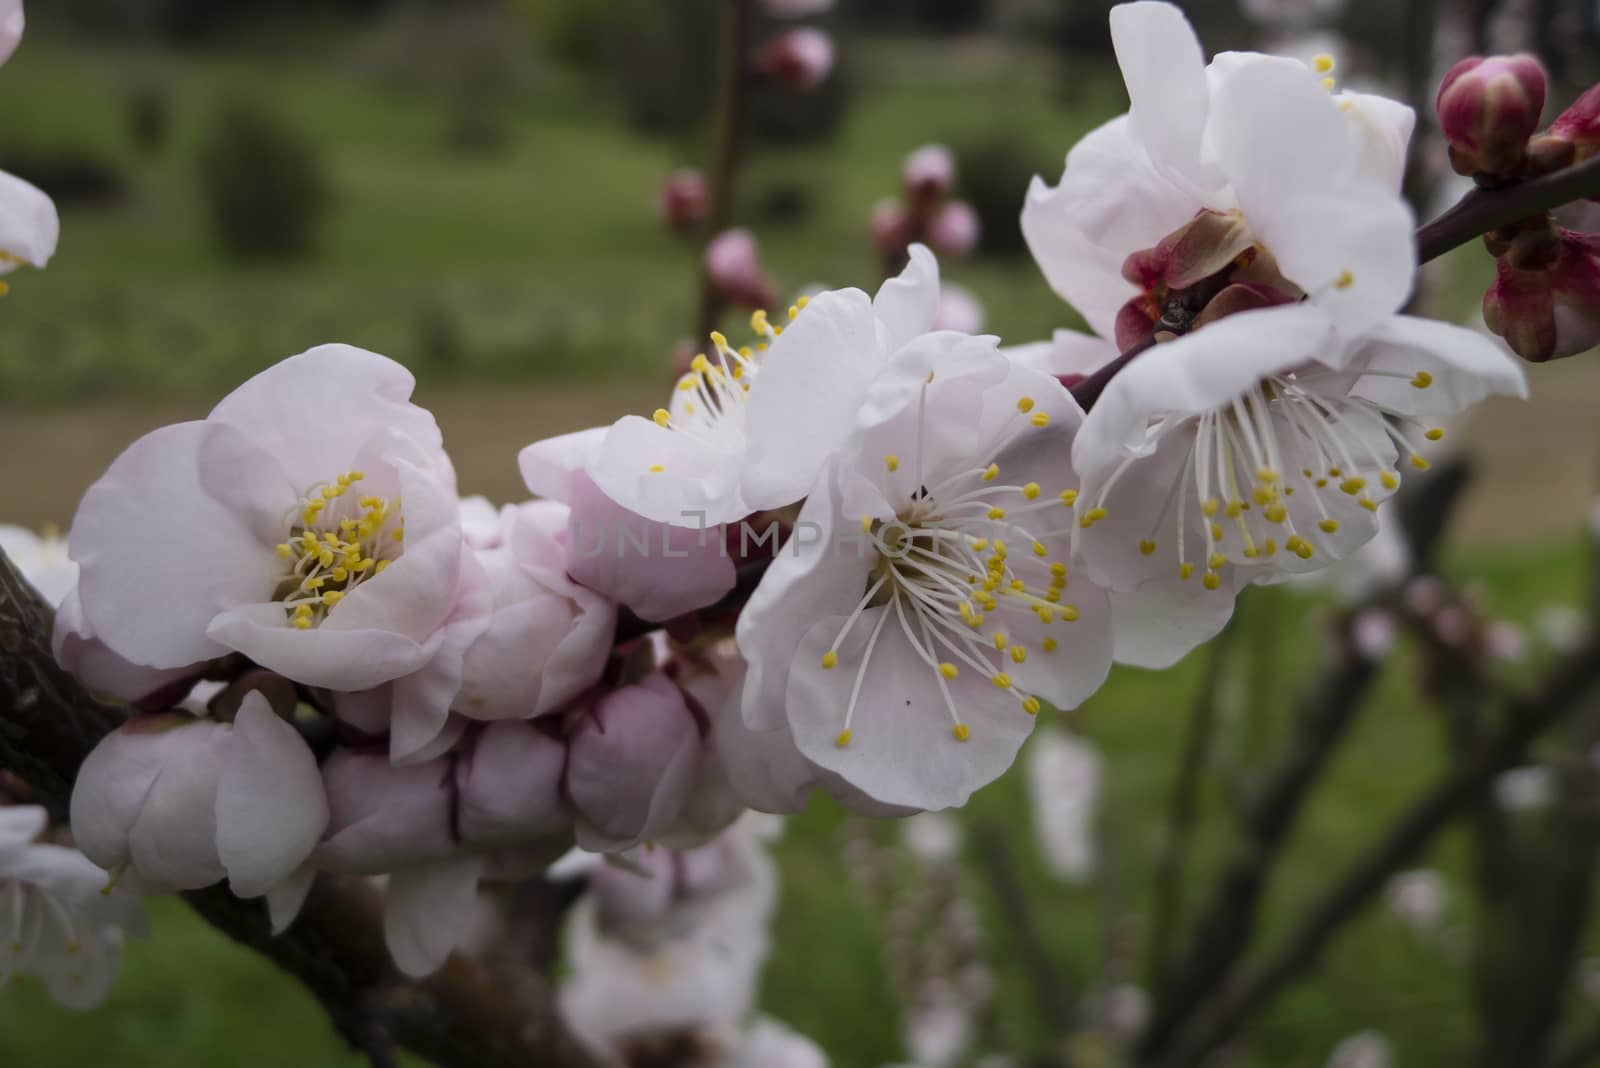 Ornamental cherry blossom in full bloom in Spring